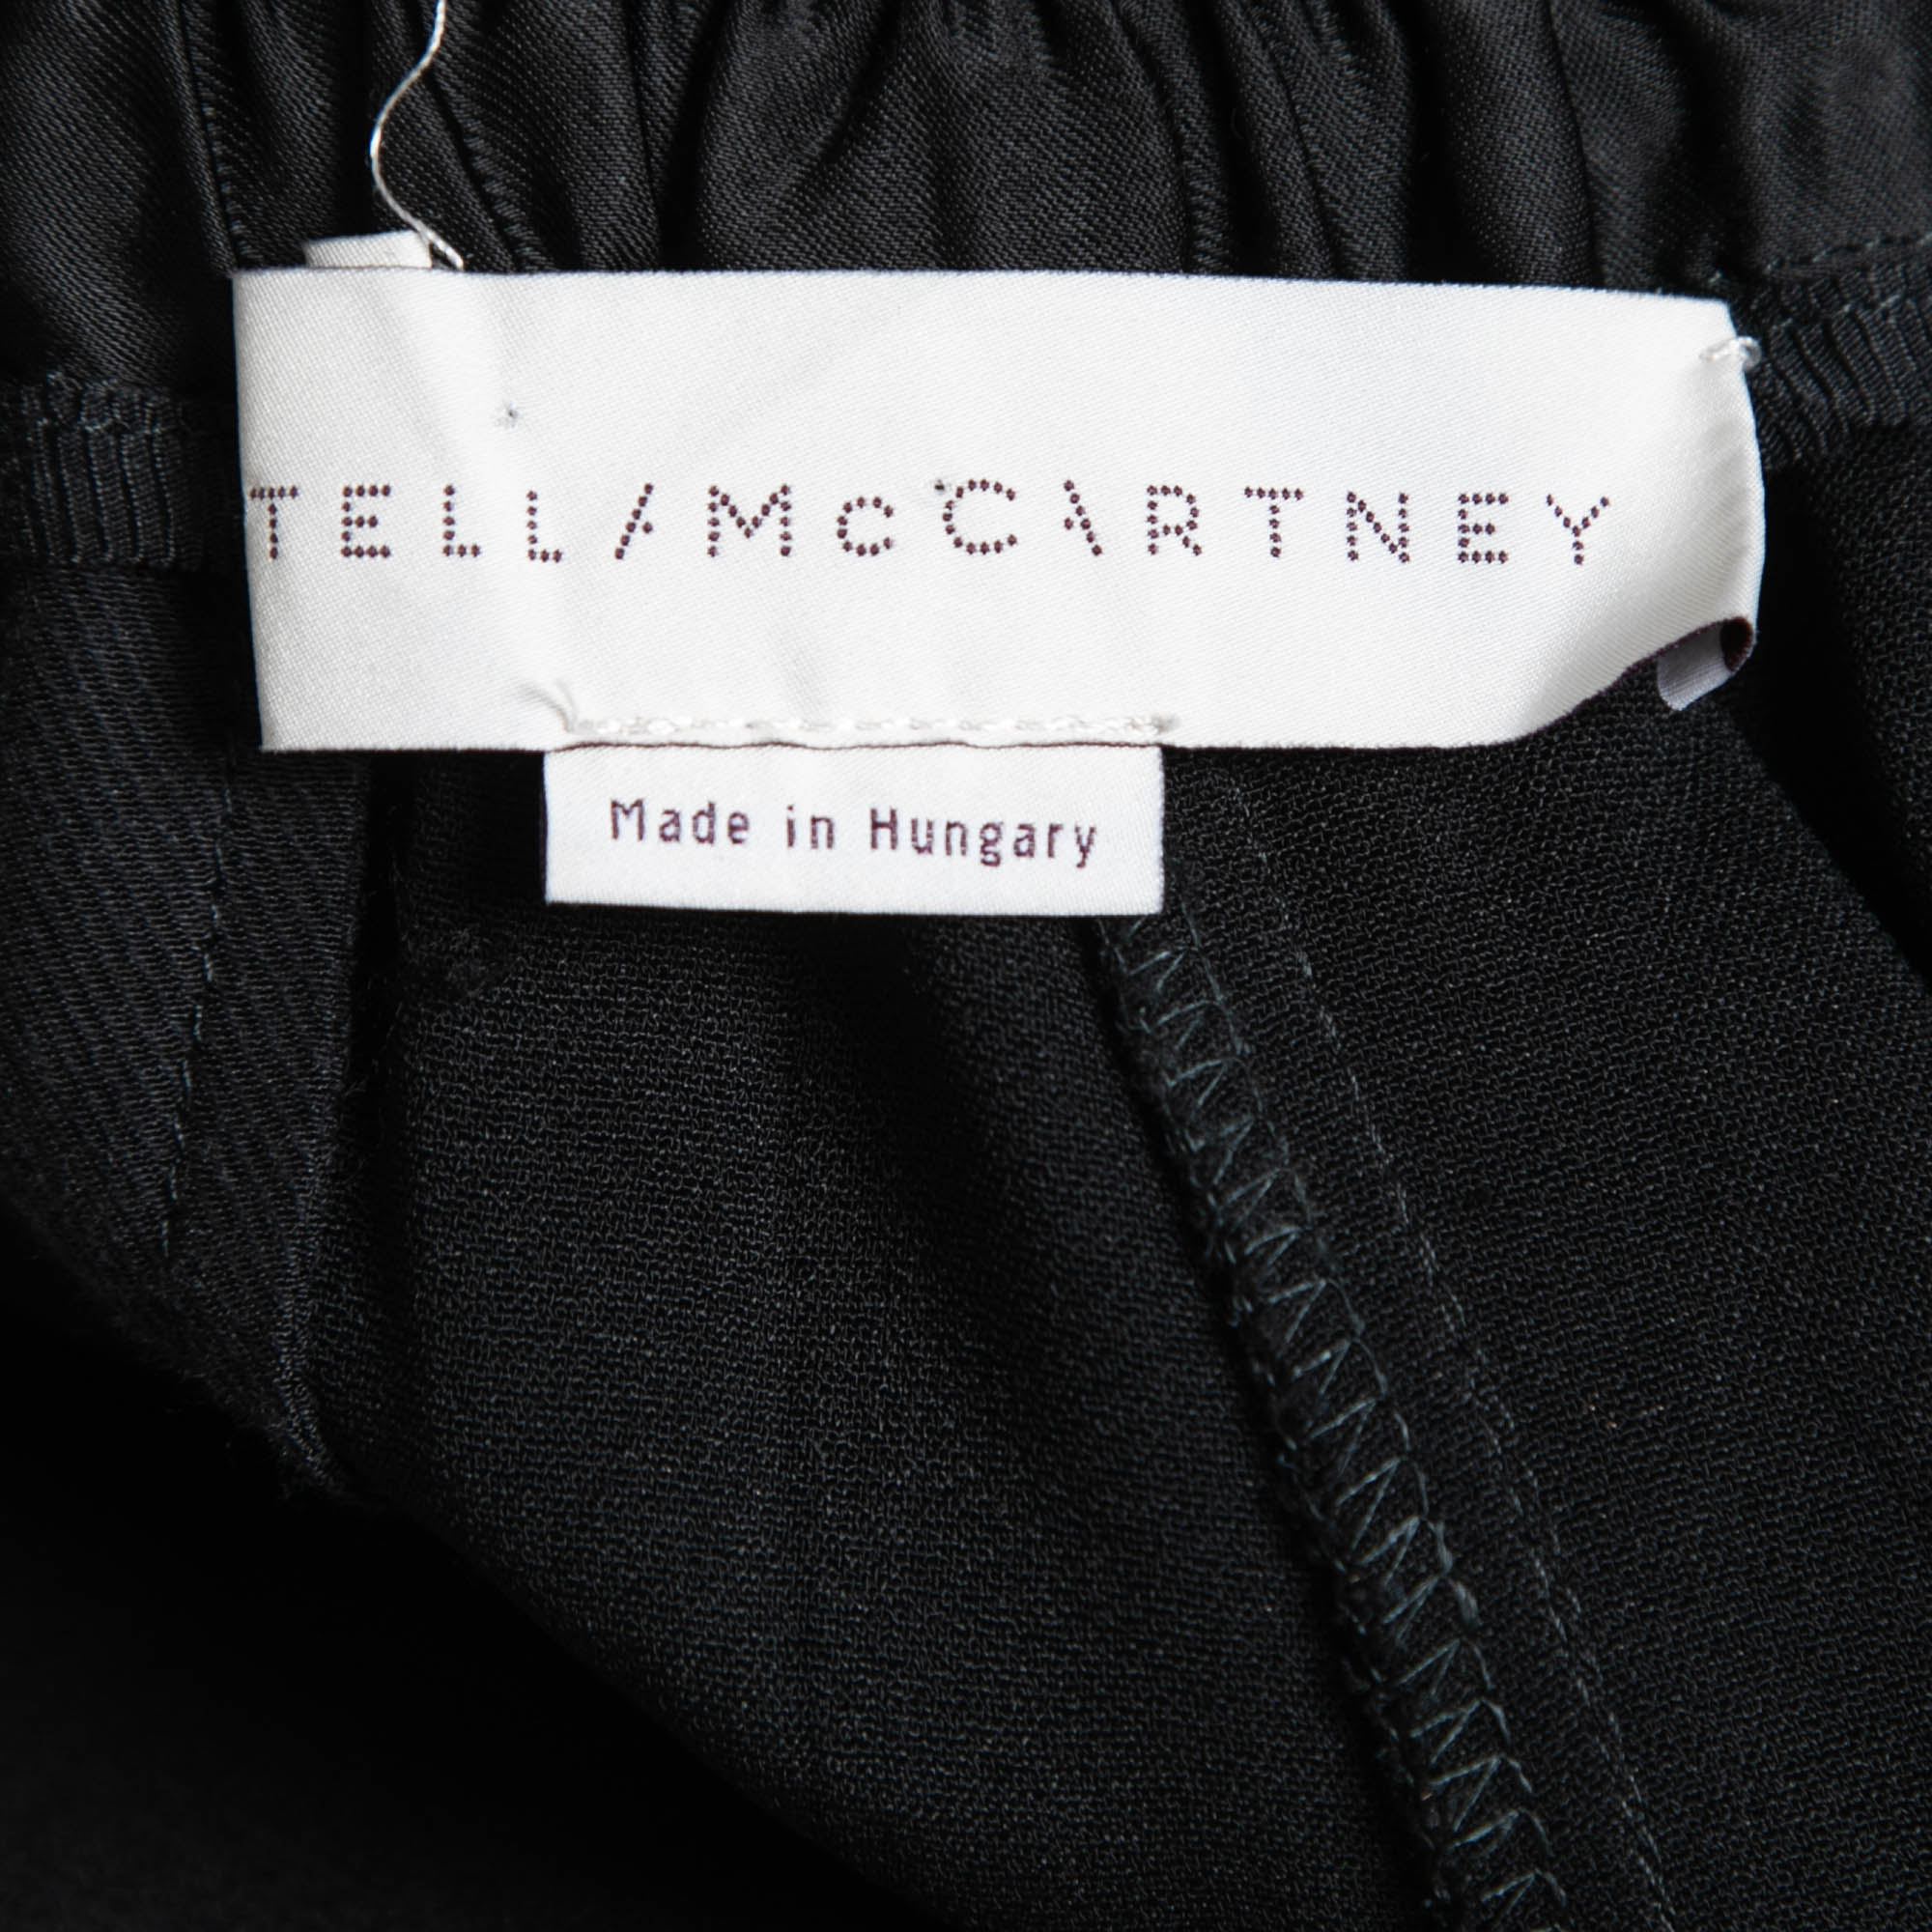 Stella McCartney Black Crepe Elasticized Waist Trousers S